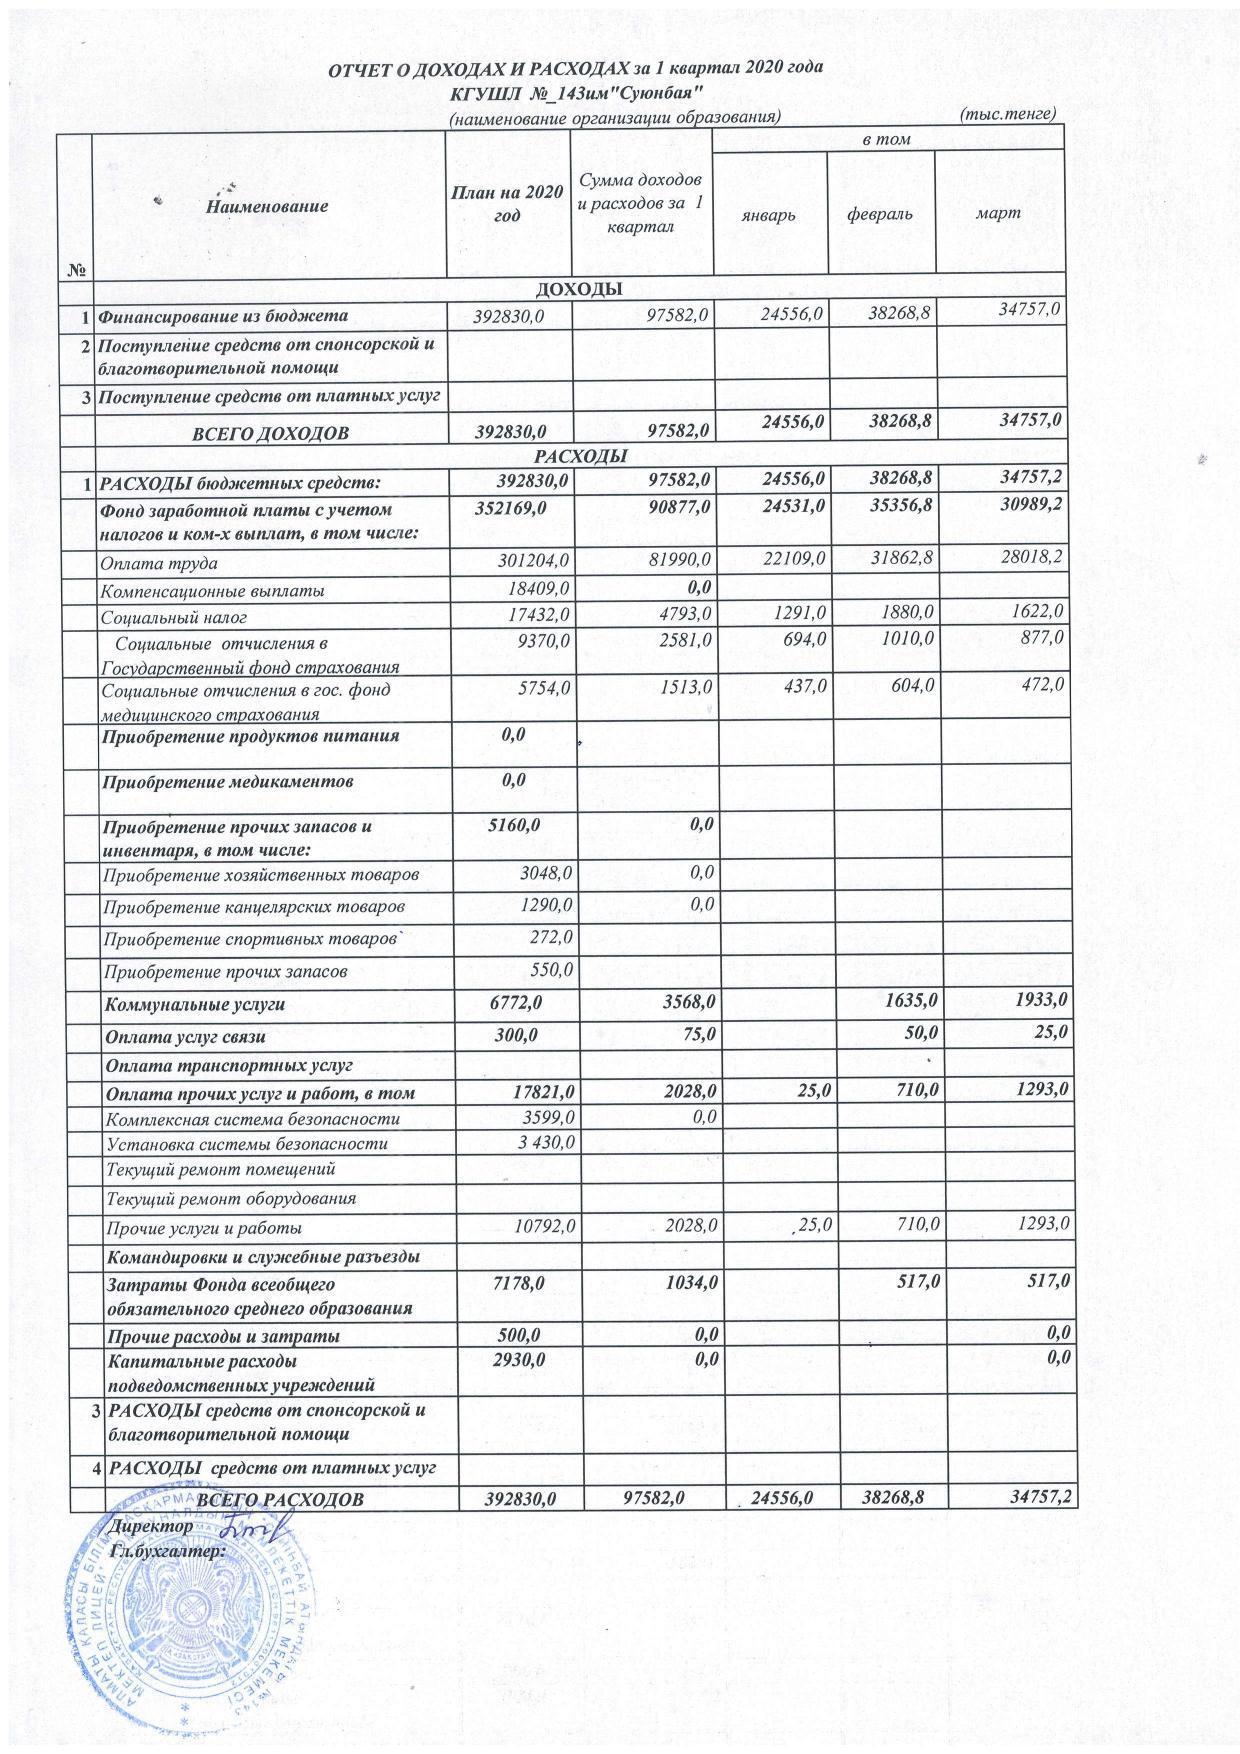 Отчет о доходах и расходах на 1 квартал 2020 г